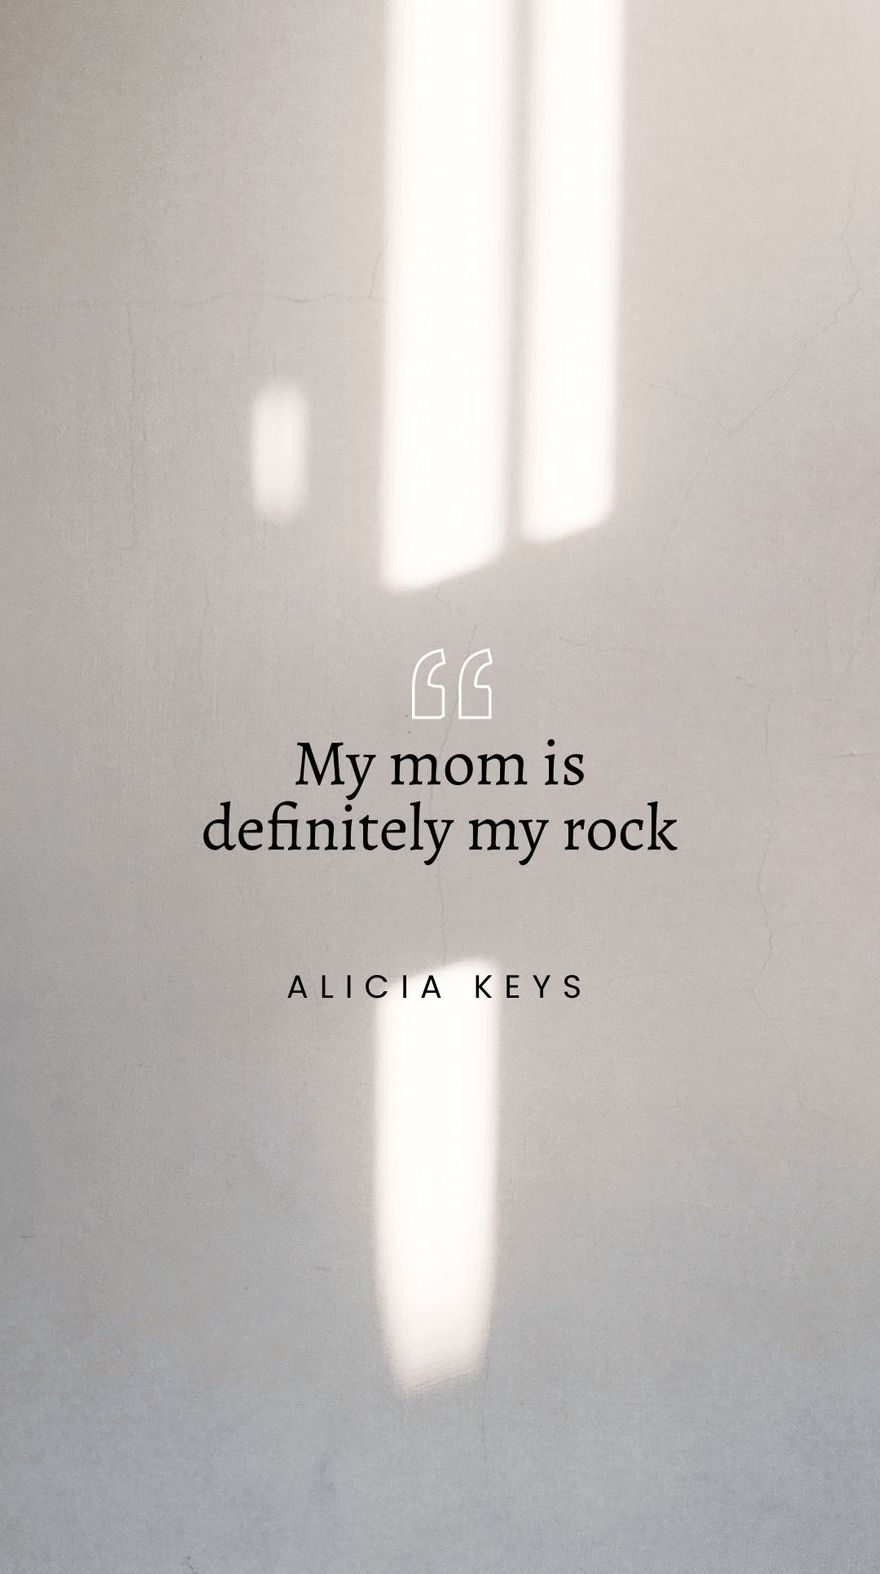 Alicia Keys - My mom is definitely my rock. in JPG